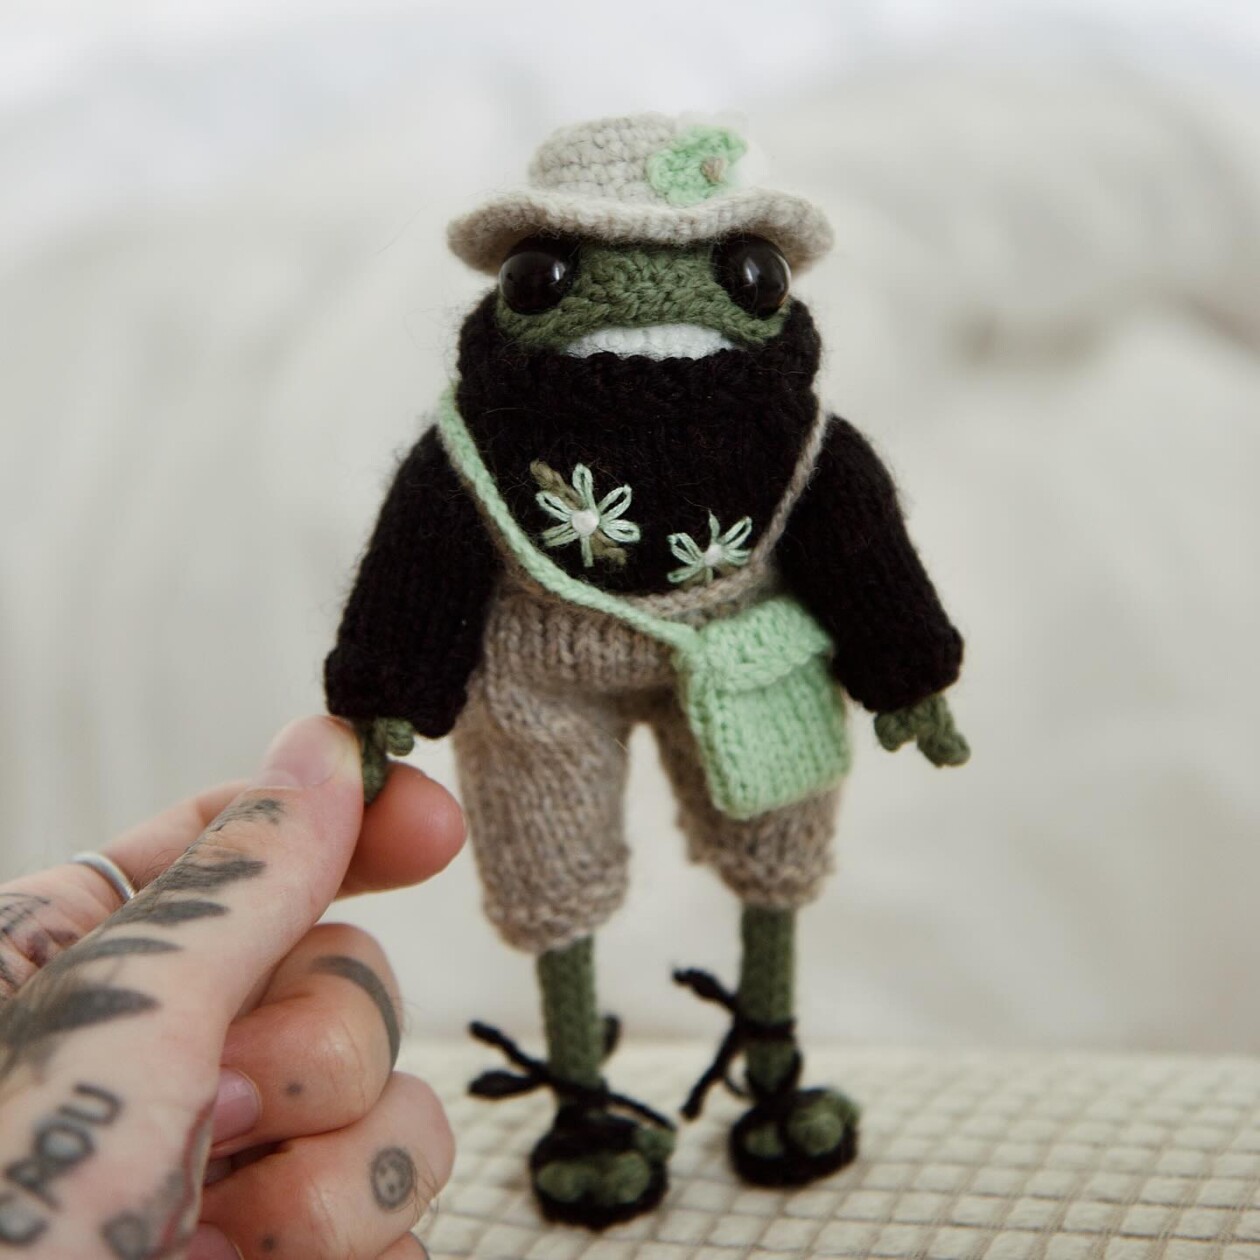 Enchanting Anthropomorphized Frog Crochet Patterns By Elliot (2)